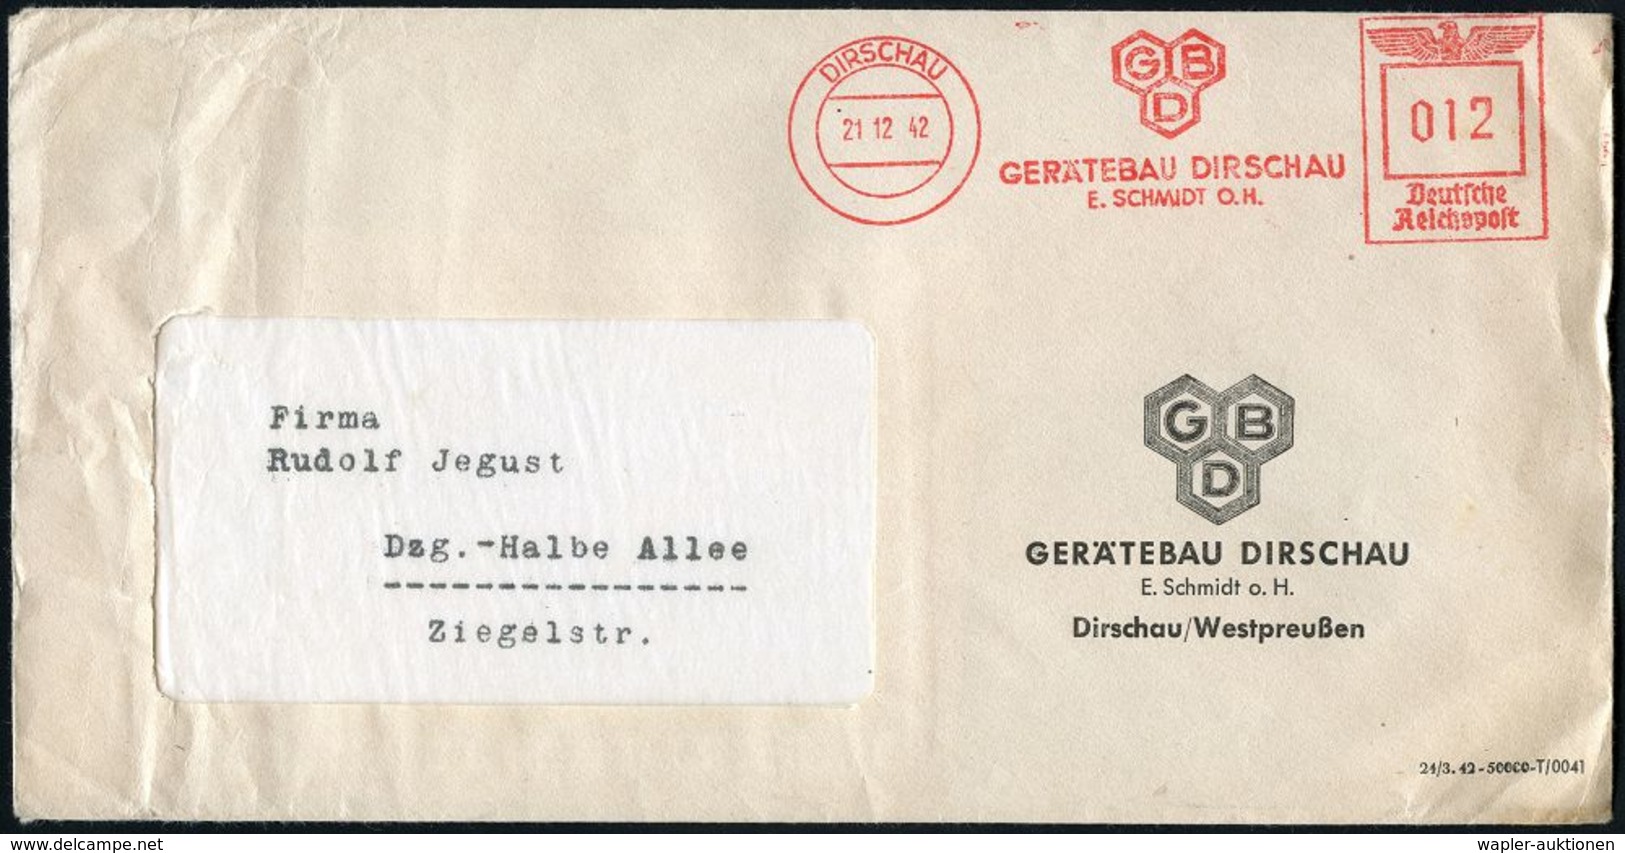 MILITÄRFLUGWESEN / MILITÄRFLUGZEUGE : DIRSCHAU/ GBD/ GERÄTEBAU DIRSCHU/ E.SCHMIDT O.H. 1942 (21.12.) Sehr Seltener AFS ( - Avions